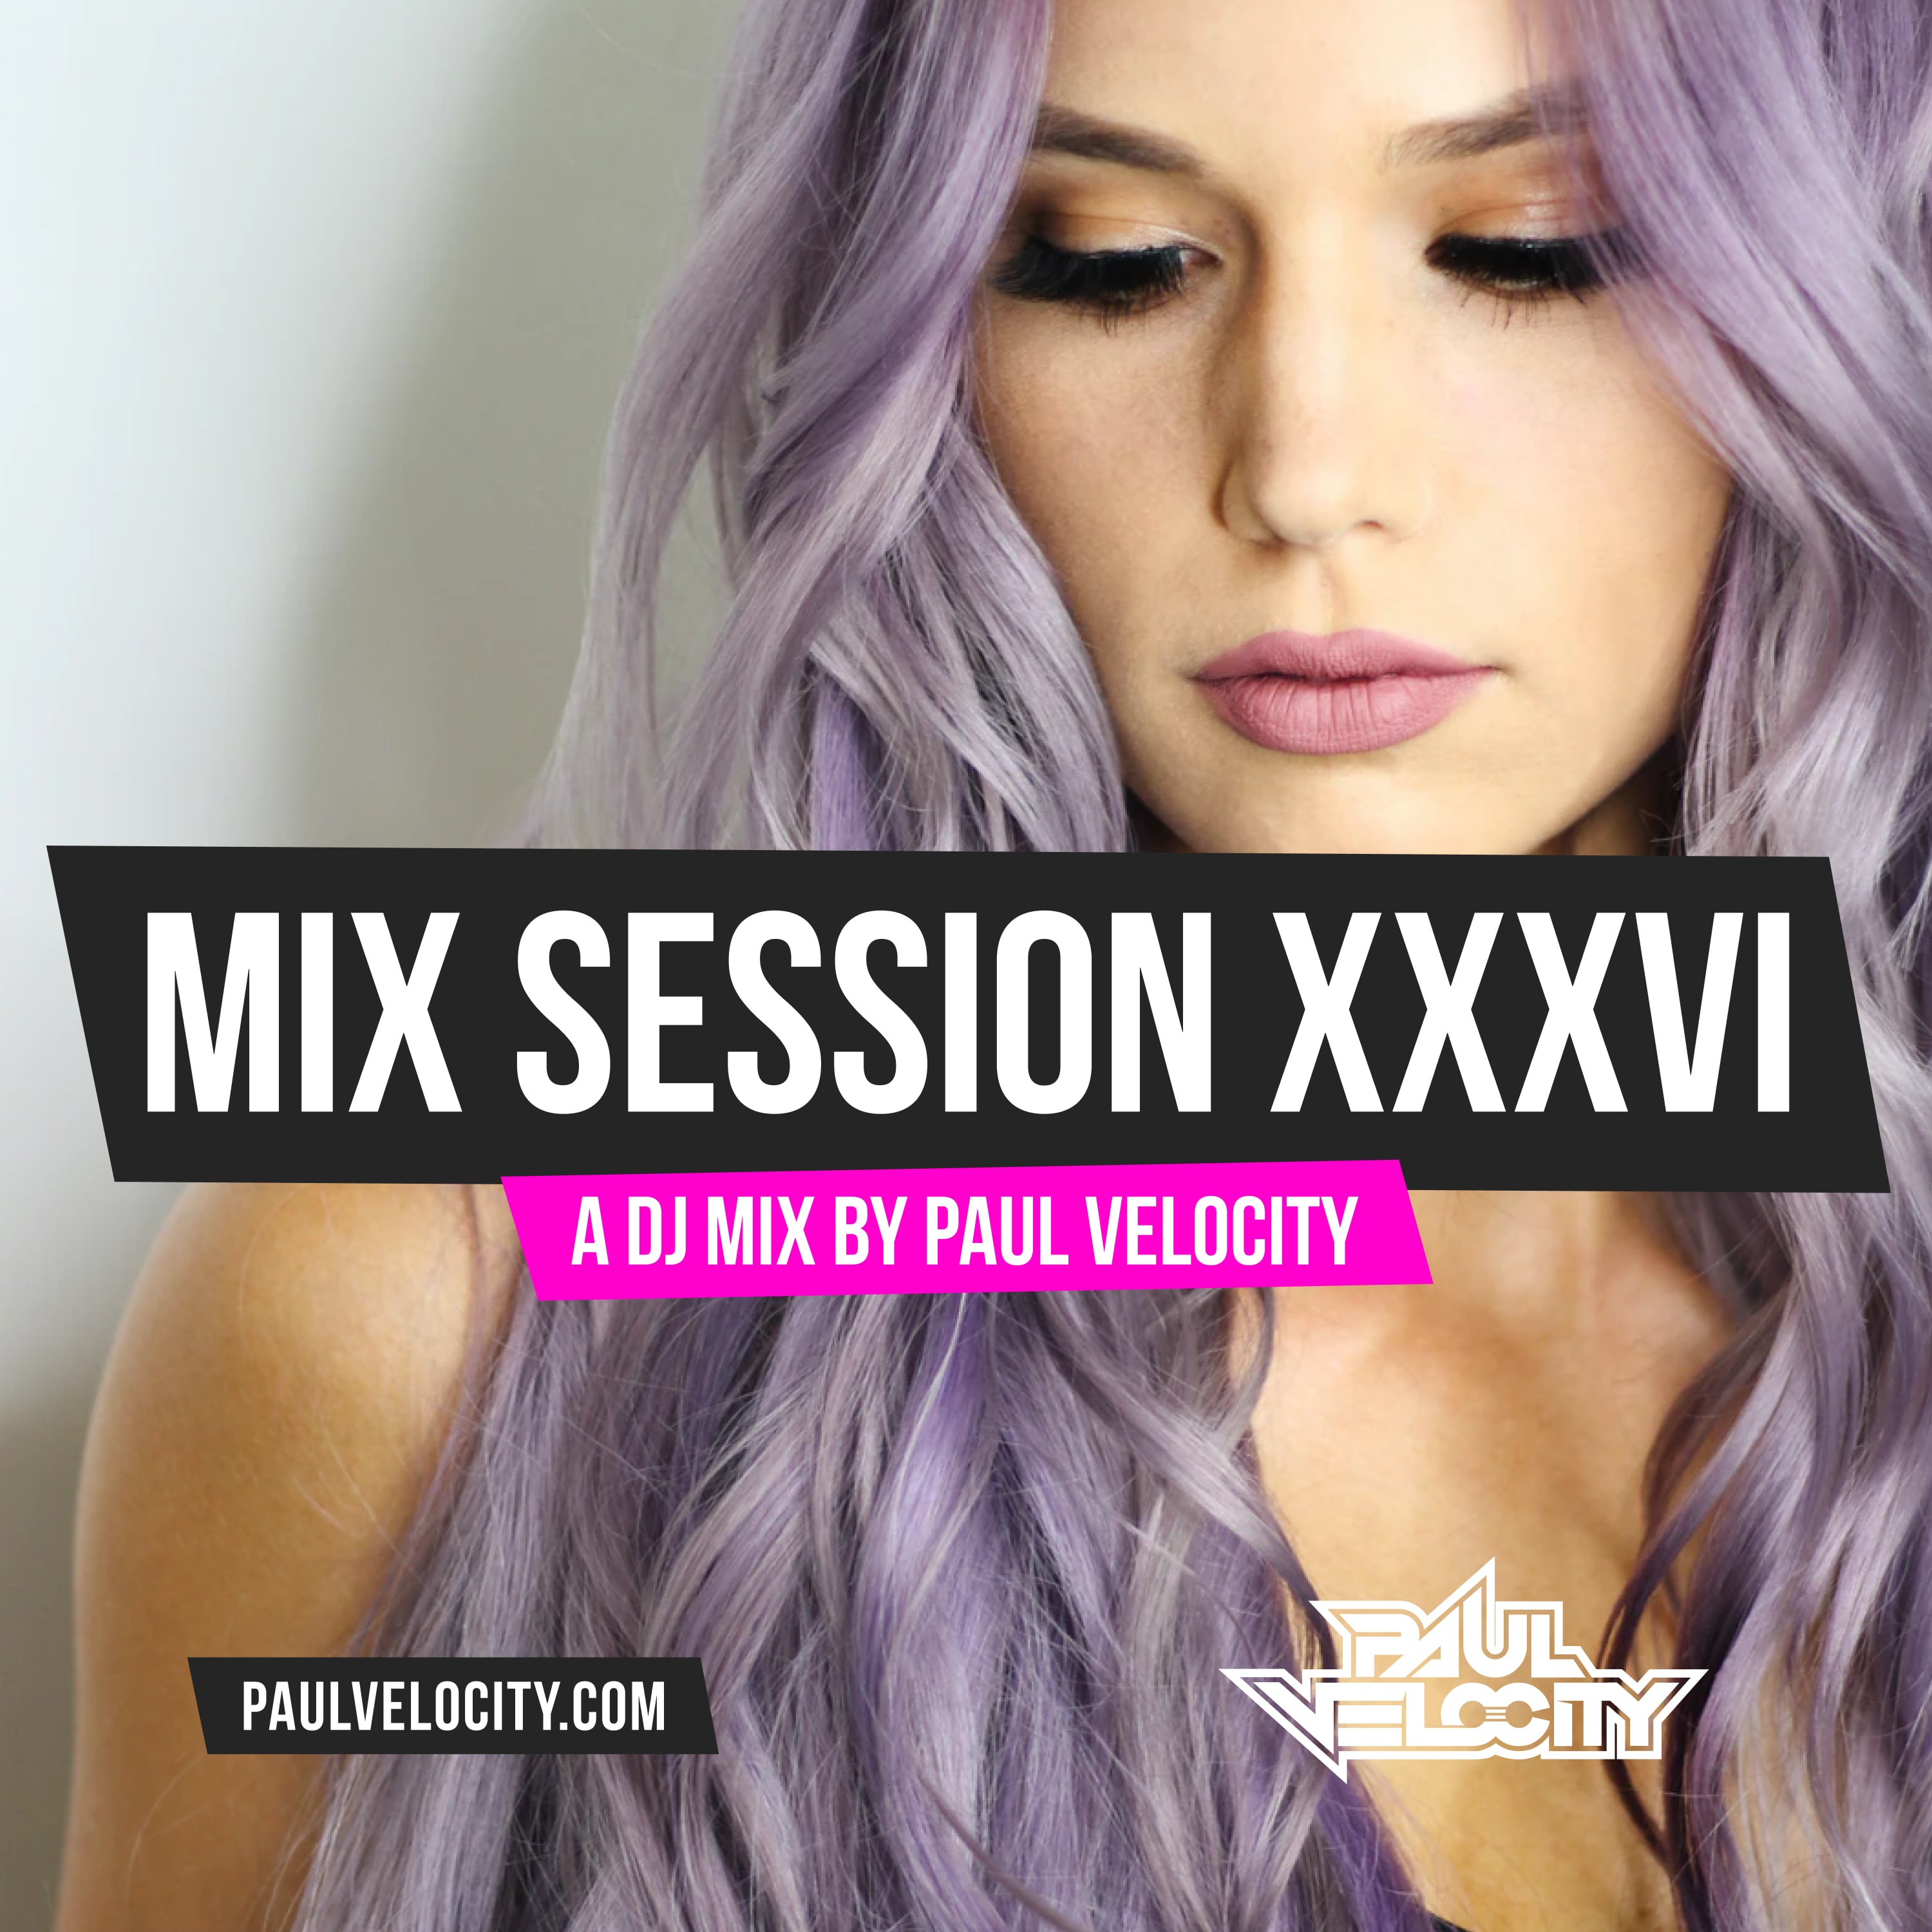 Mix Session XXXVI